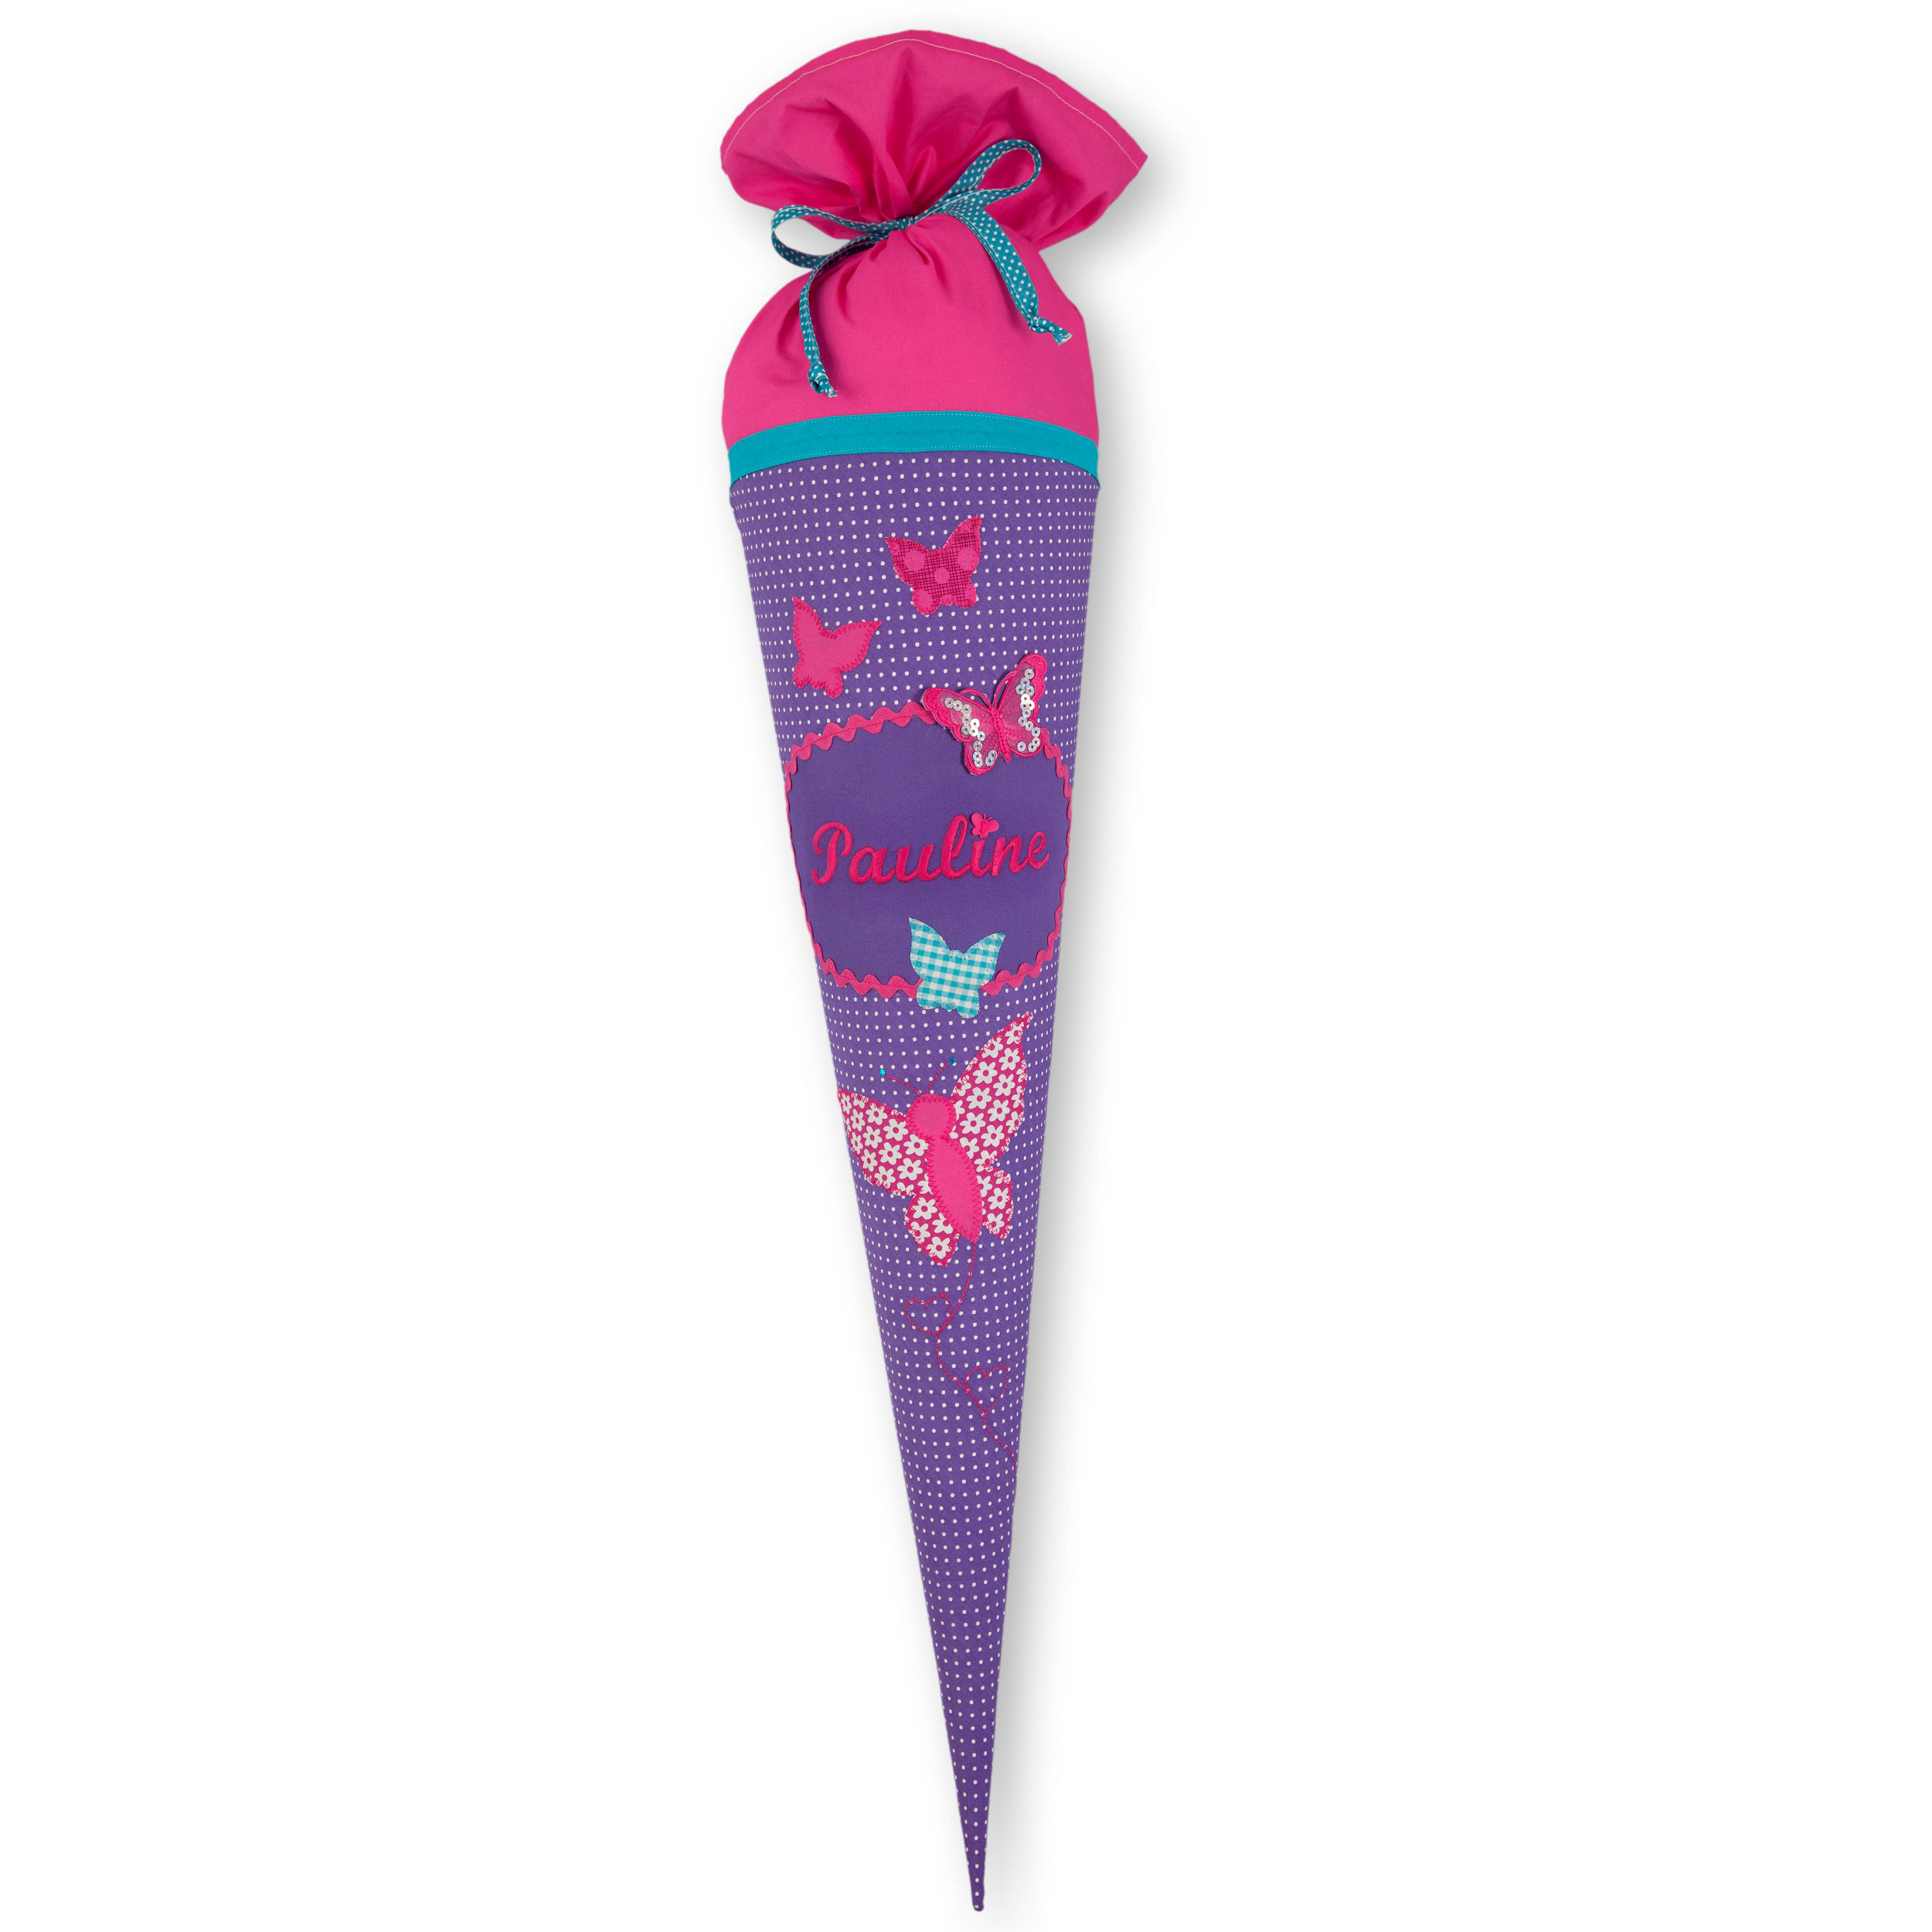 Schultüte Schmetterlinge lila pink personalisierbar - Stoffschultüte